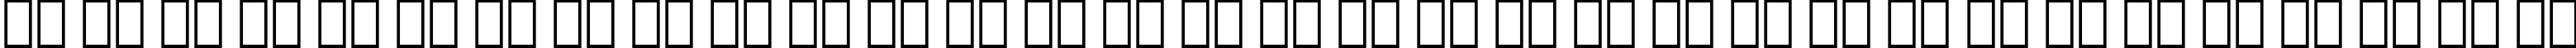 Пример написания русского алфавита шрифтом Serifa Bold Condensed BT